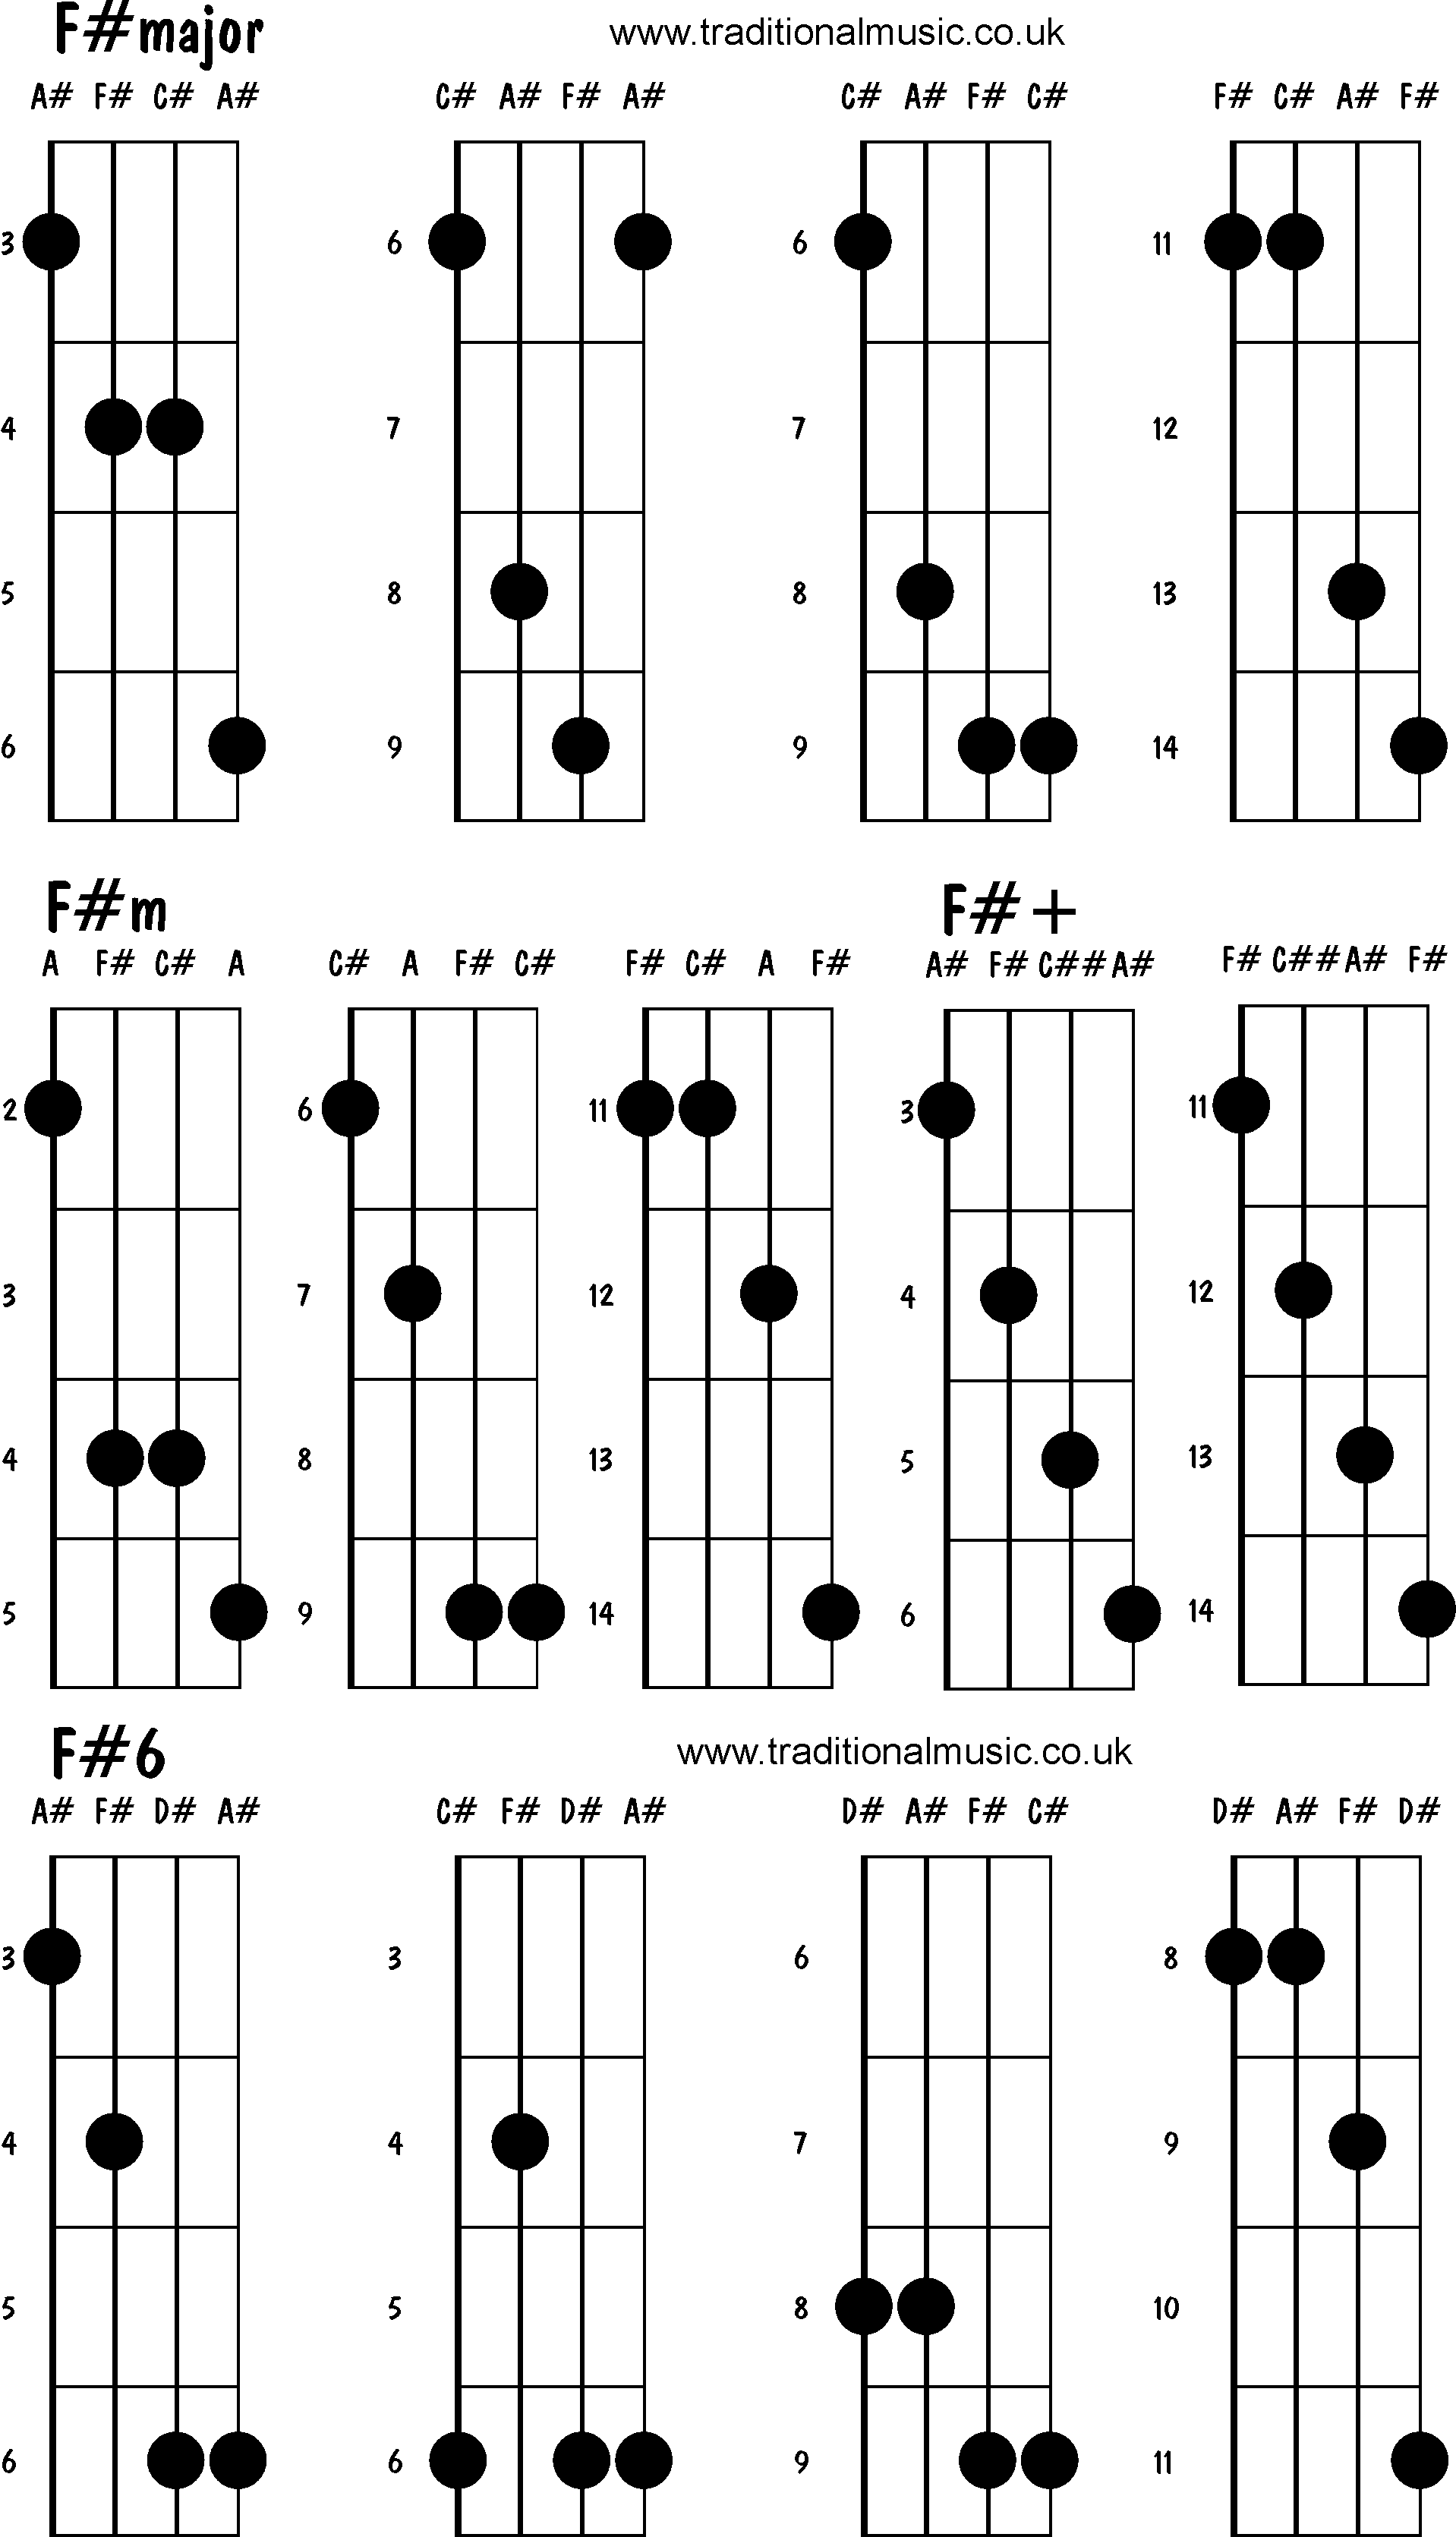 Advanced mandolin chords: F#major, F#m, F#+, F#6